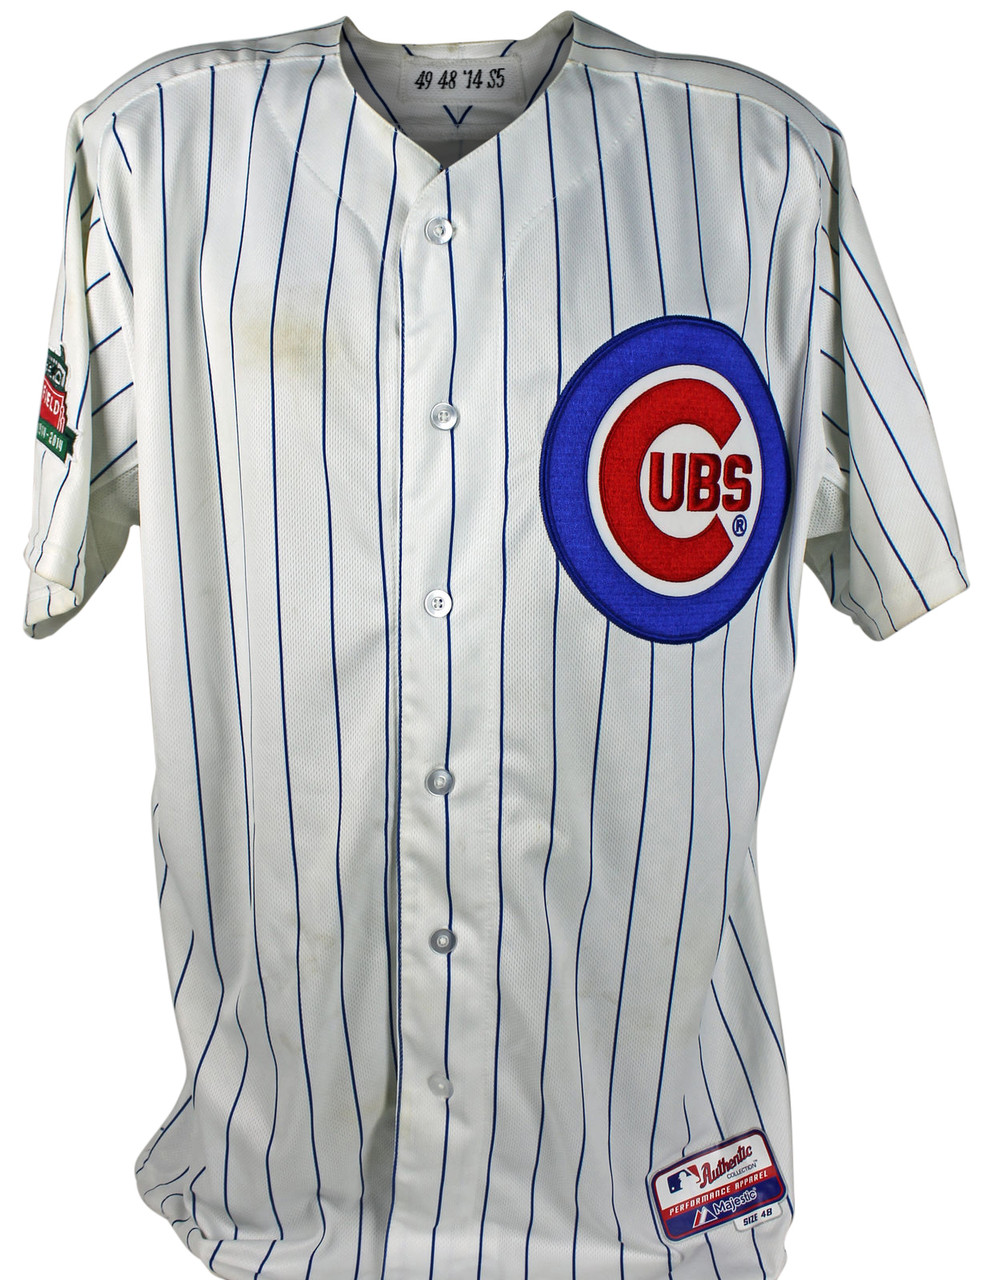 2016 Jake Arrieta Game Worn Chicago Cubs Jersey.  Baseball